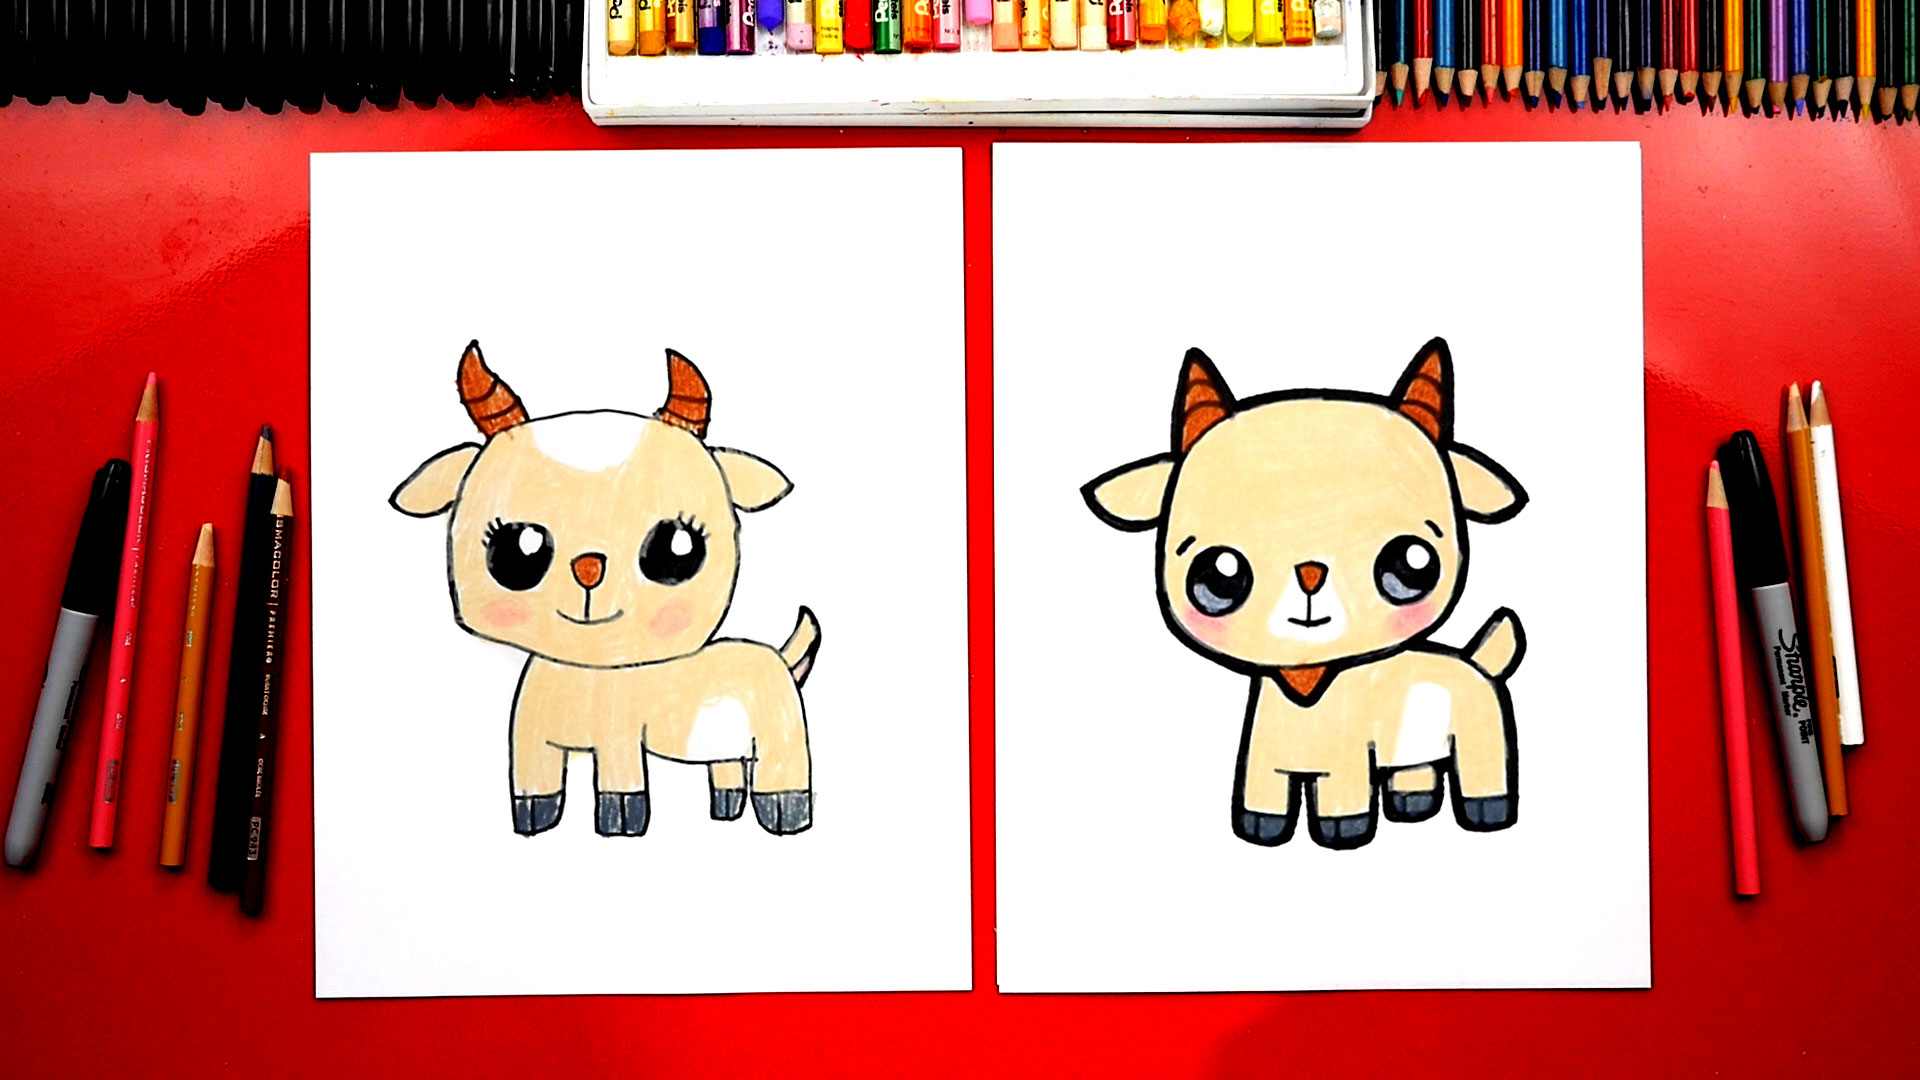 Goat coloring pages - ColoringLib